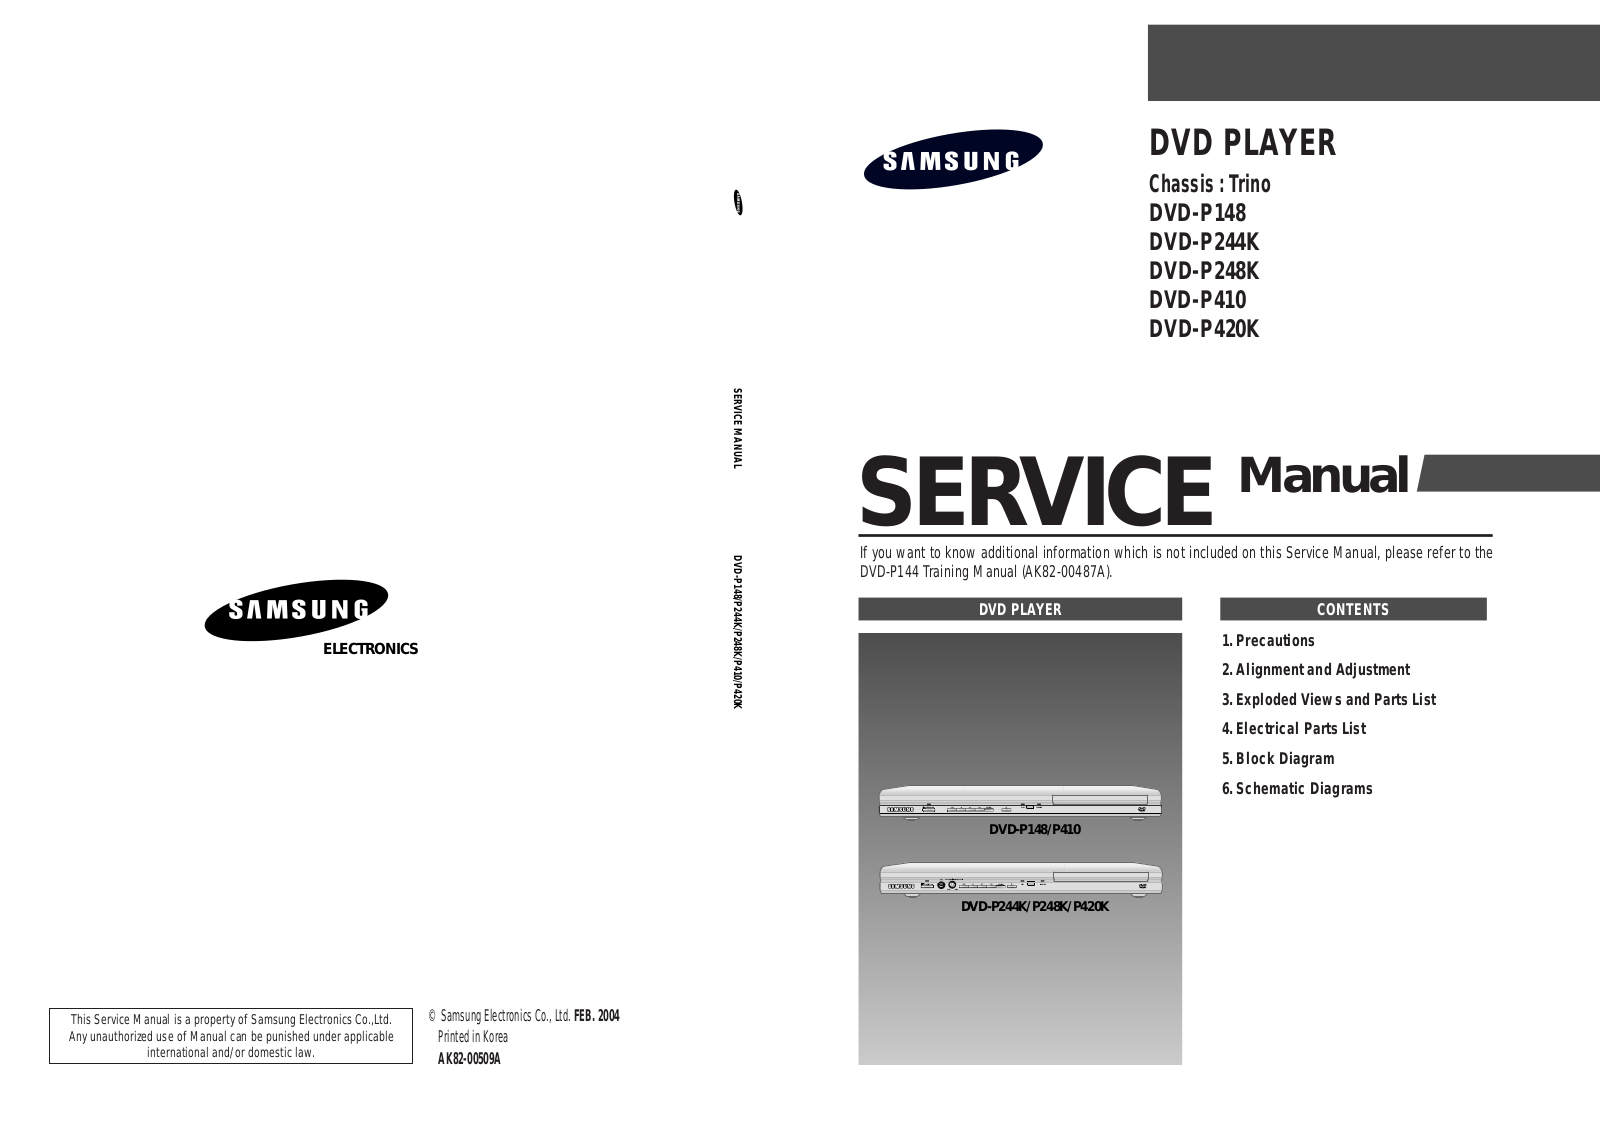 Samsung DVD-P148, DVD-P244K, DVD-P248K, DVD-P410, DVD-P420K Service Manual